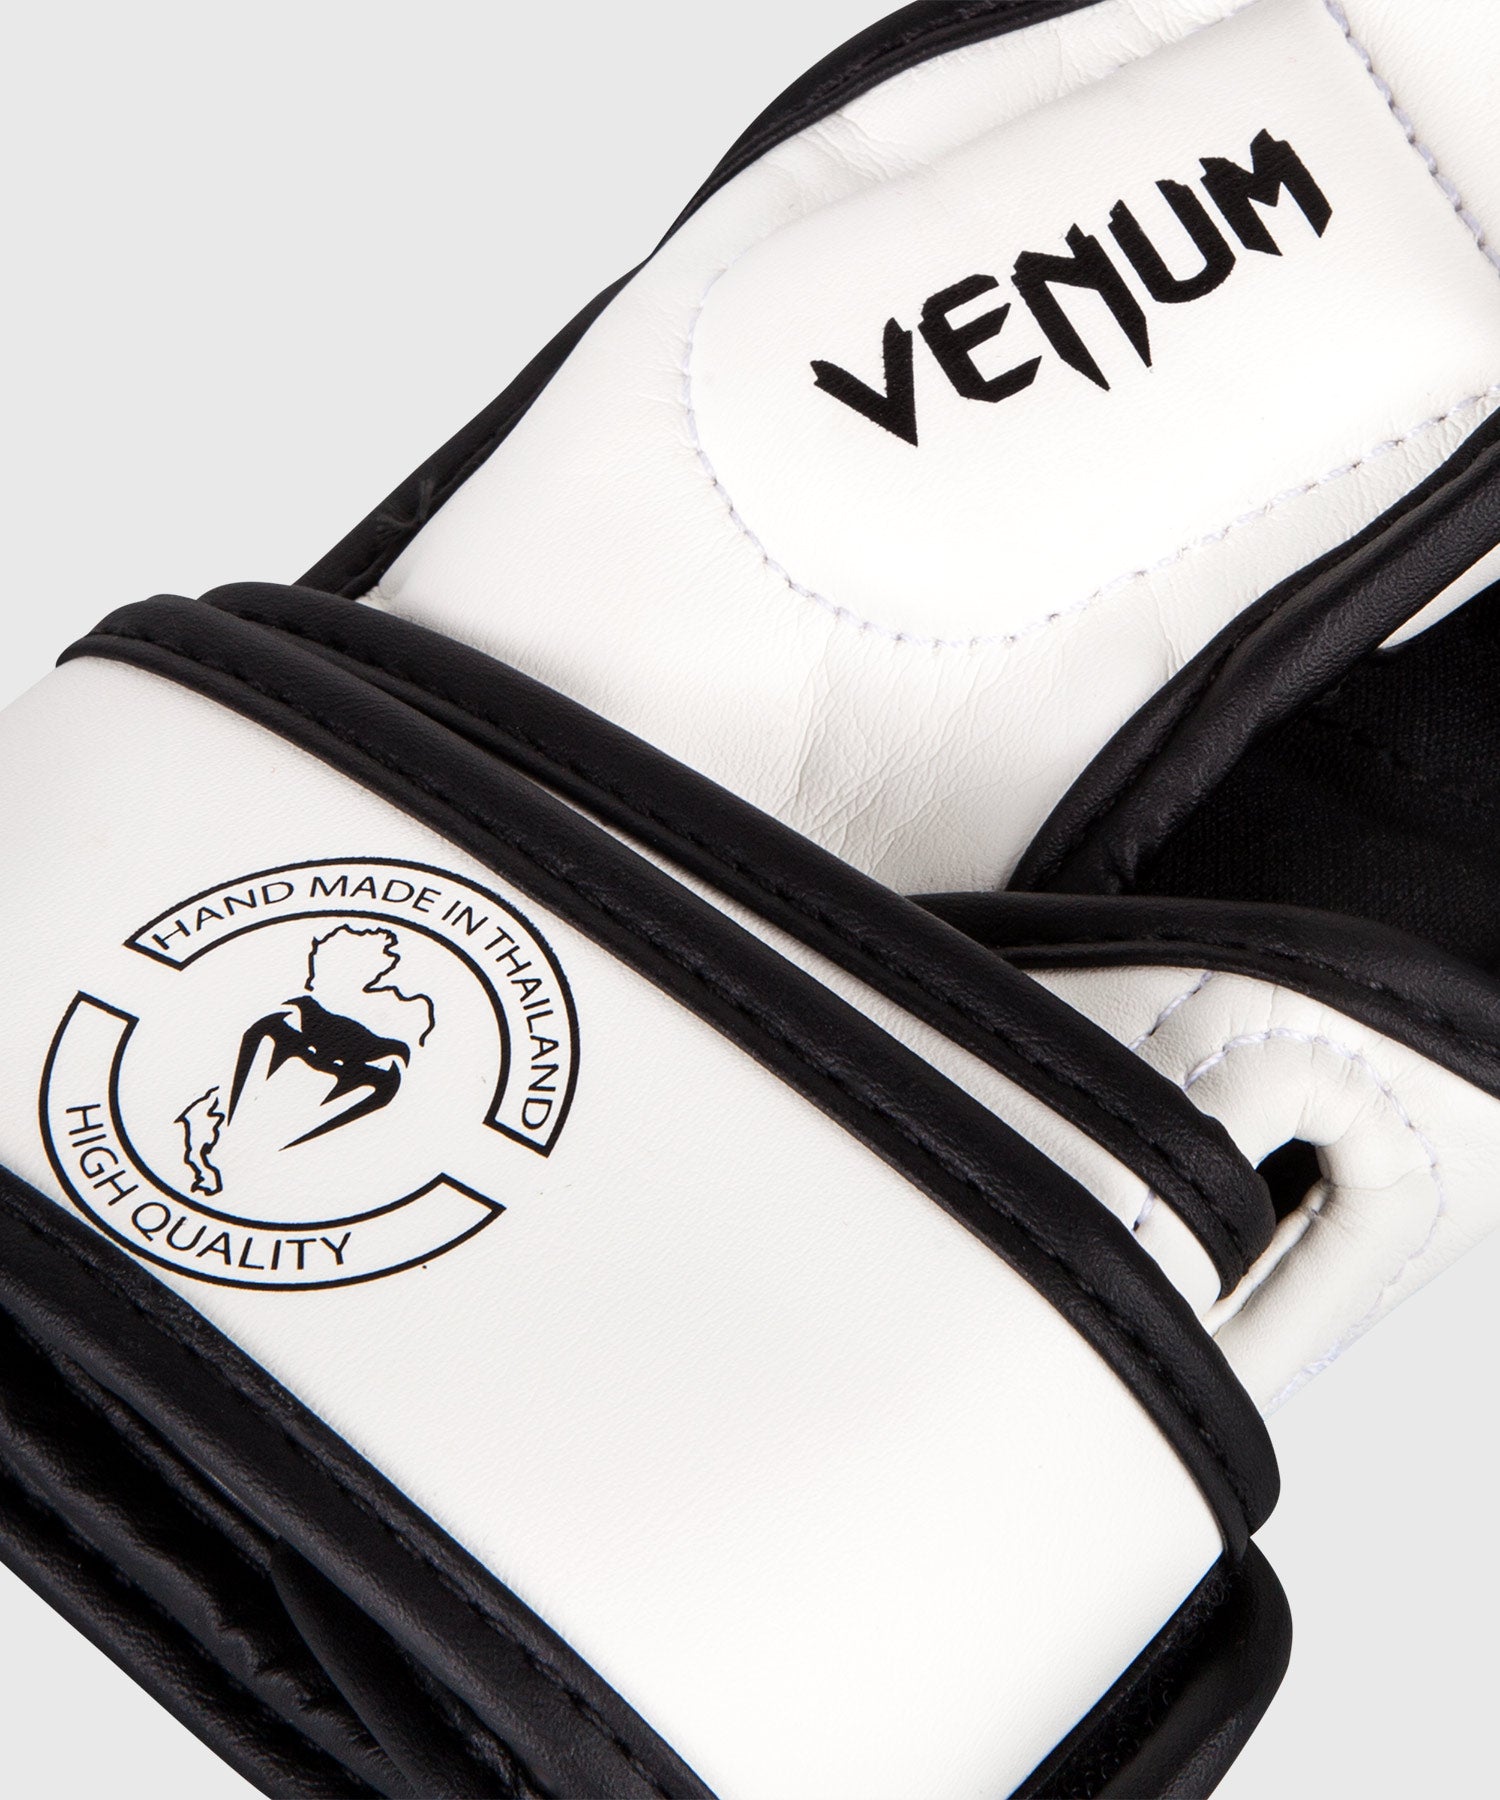 Venum Impact Sparring MMA Gloves Blanc-Noir